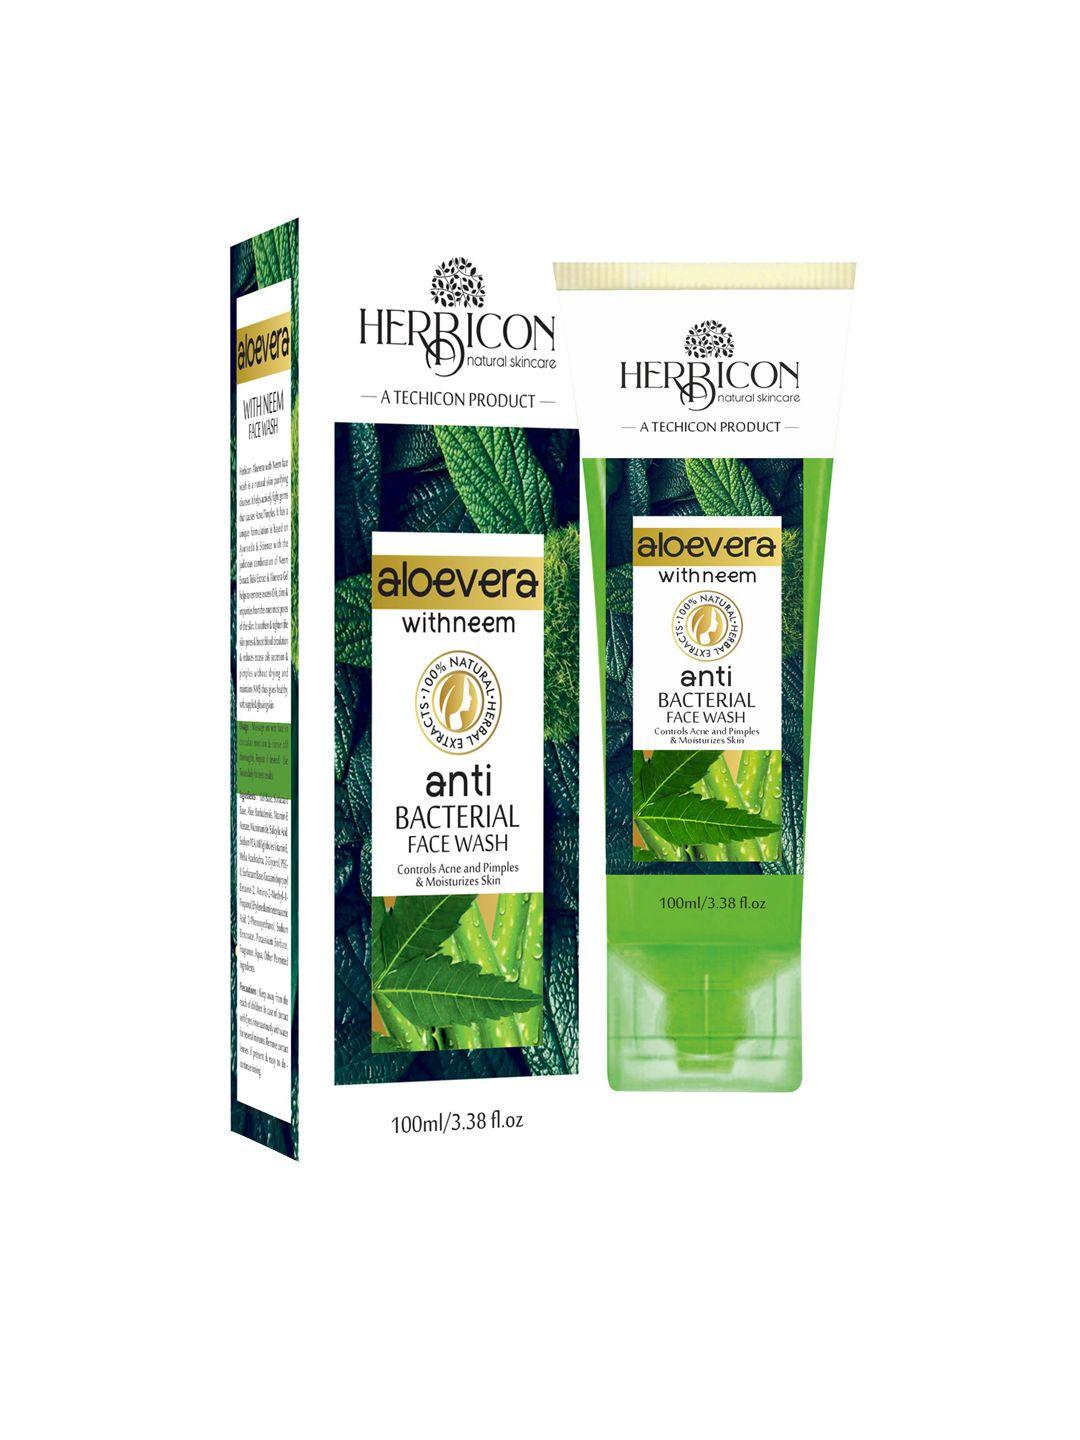 herbicon aloe vera with neem anti bacterial face wash with vitamin e granules